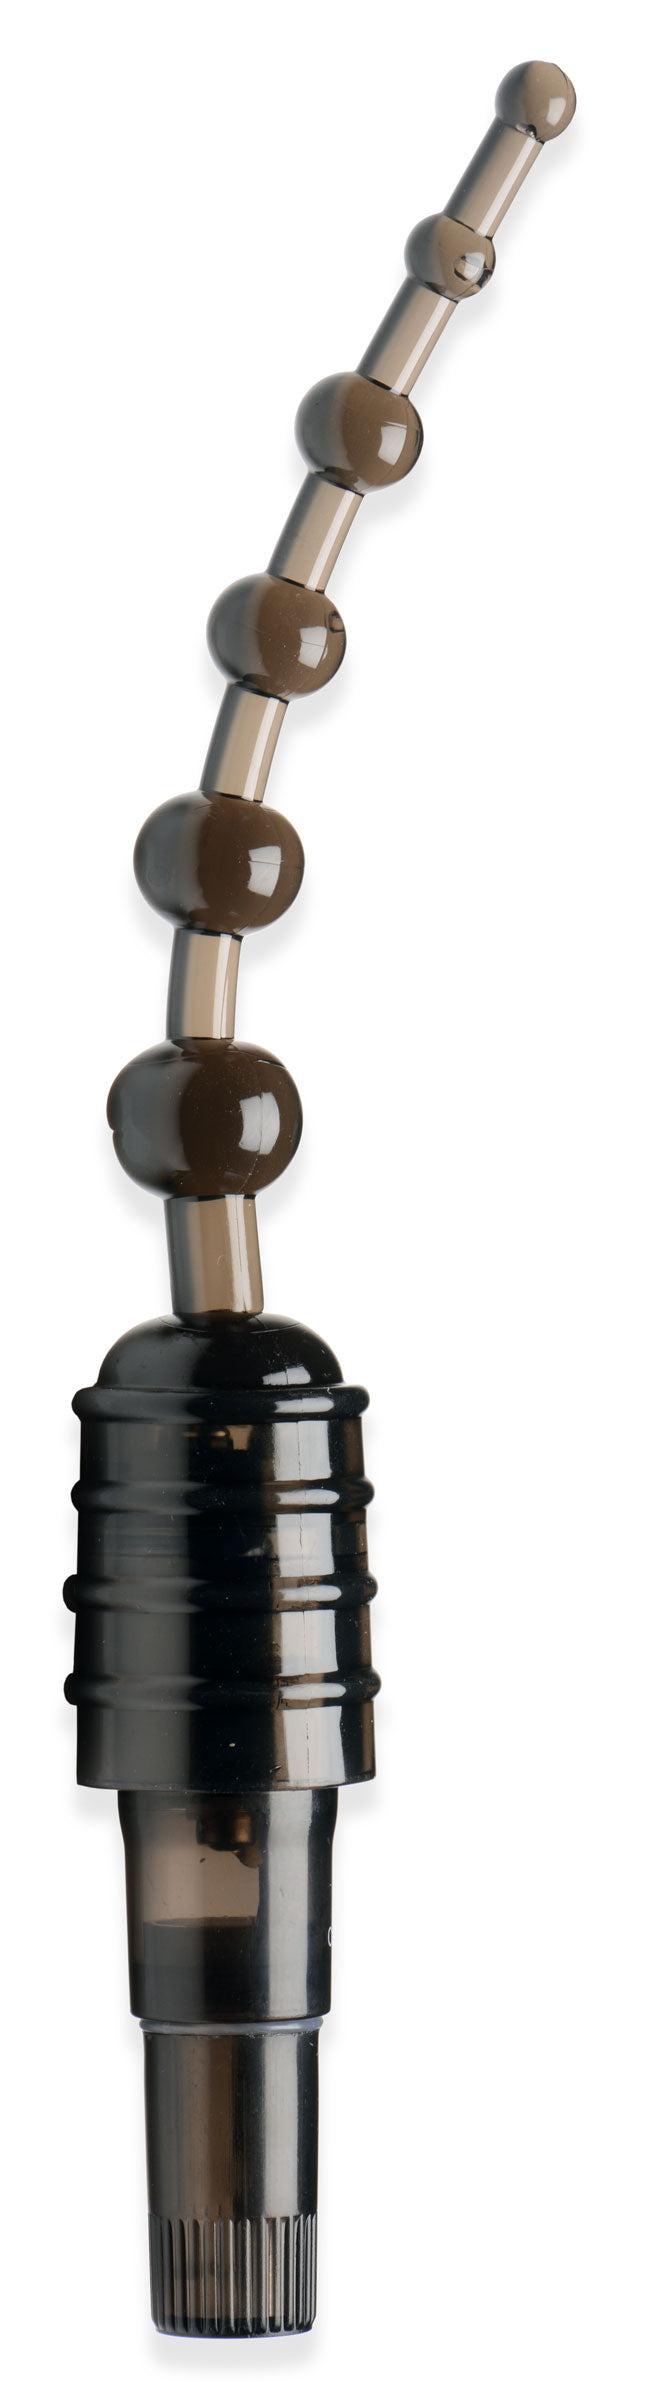 Slim Anal Beads Rocket Vibrator vibesextoys from Trinity Vibes